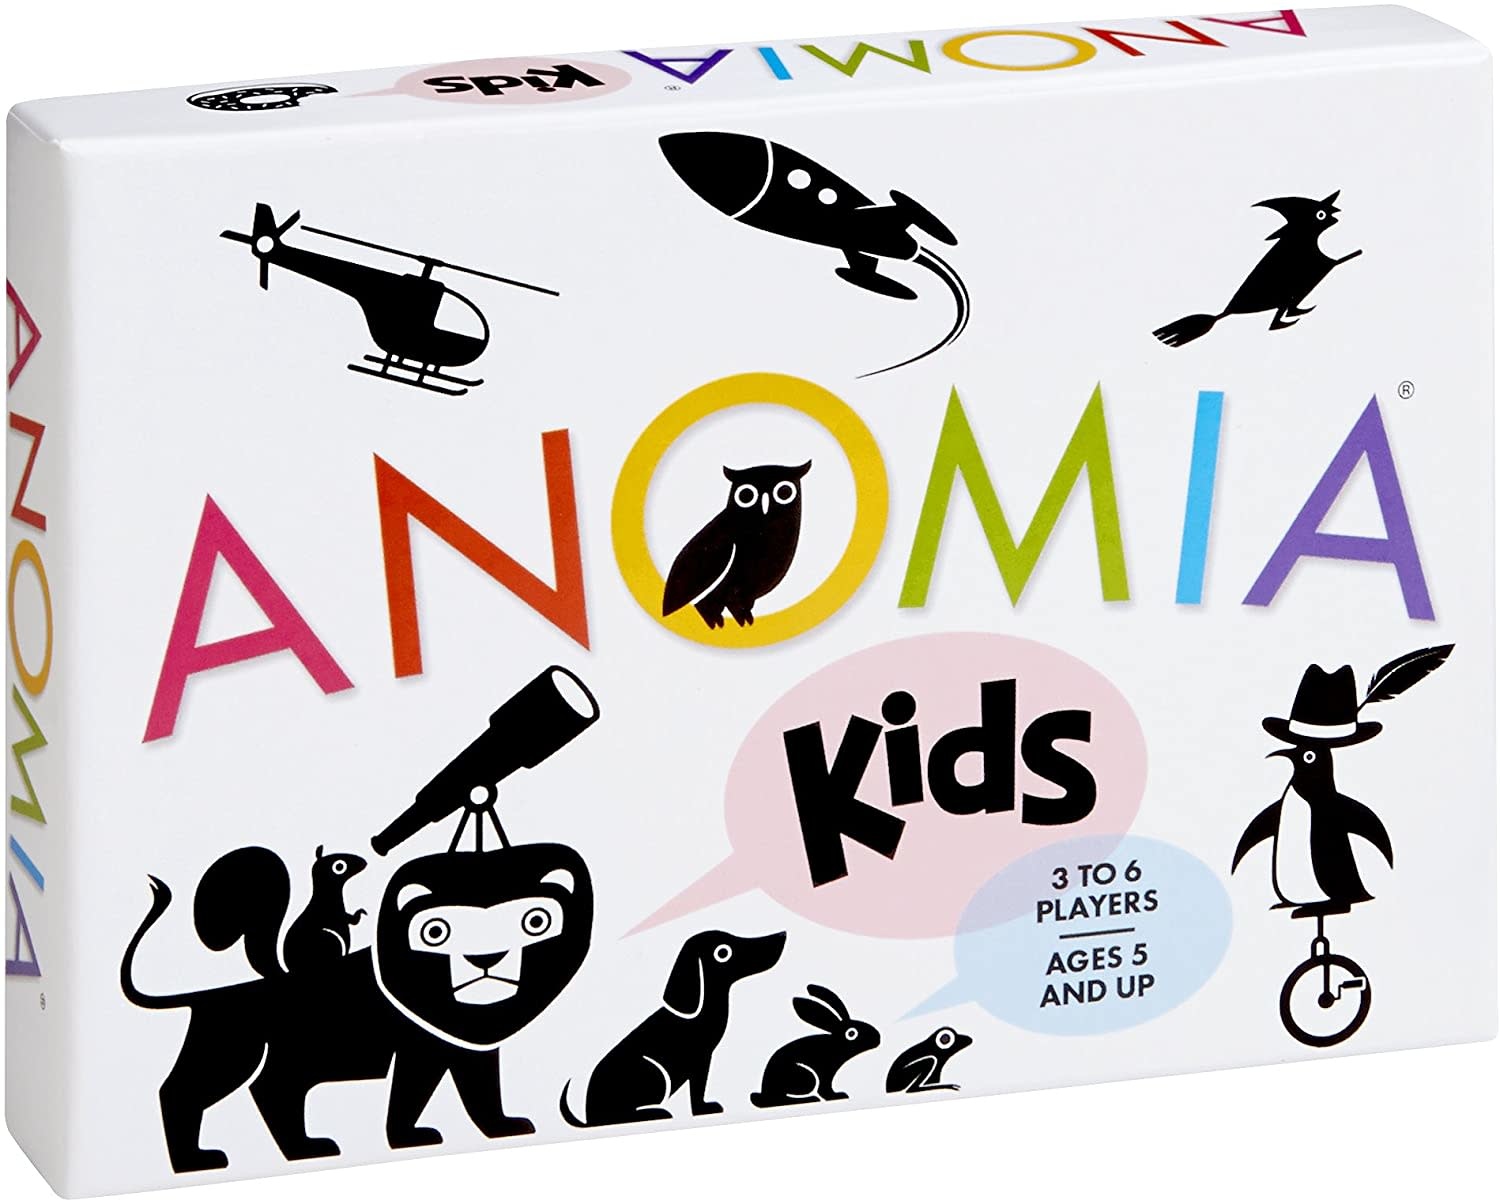 Anomia - Kids